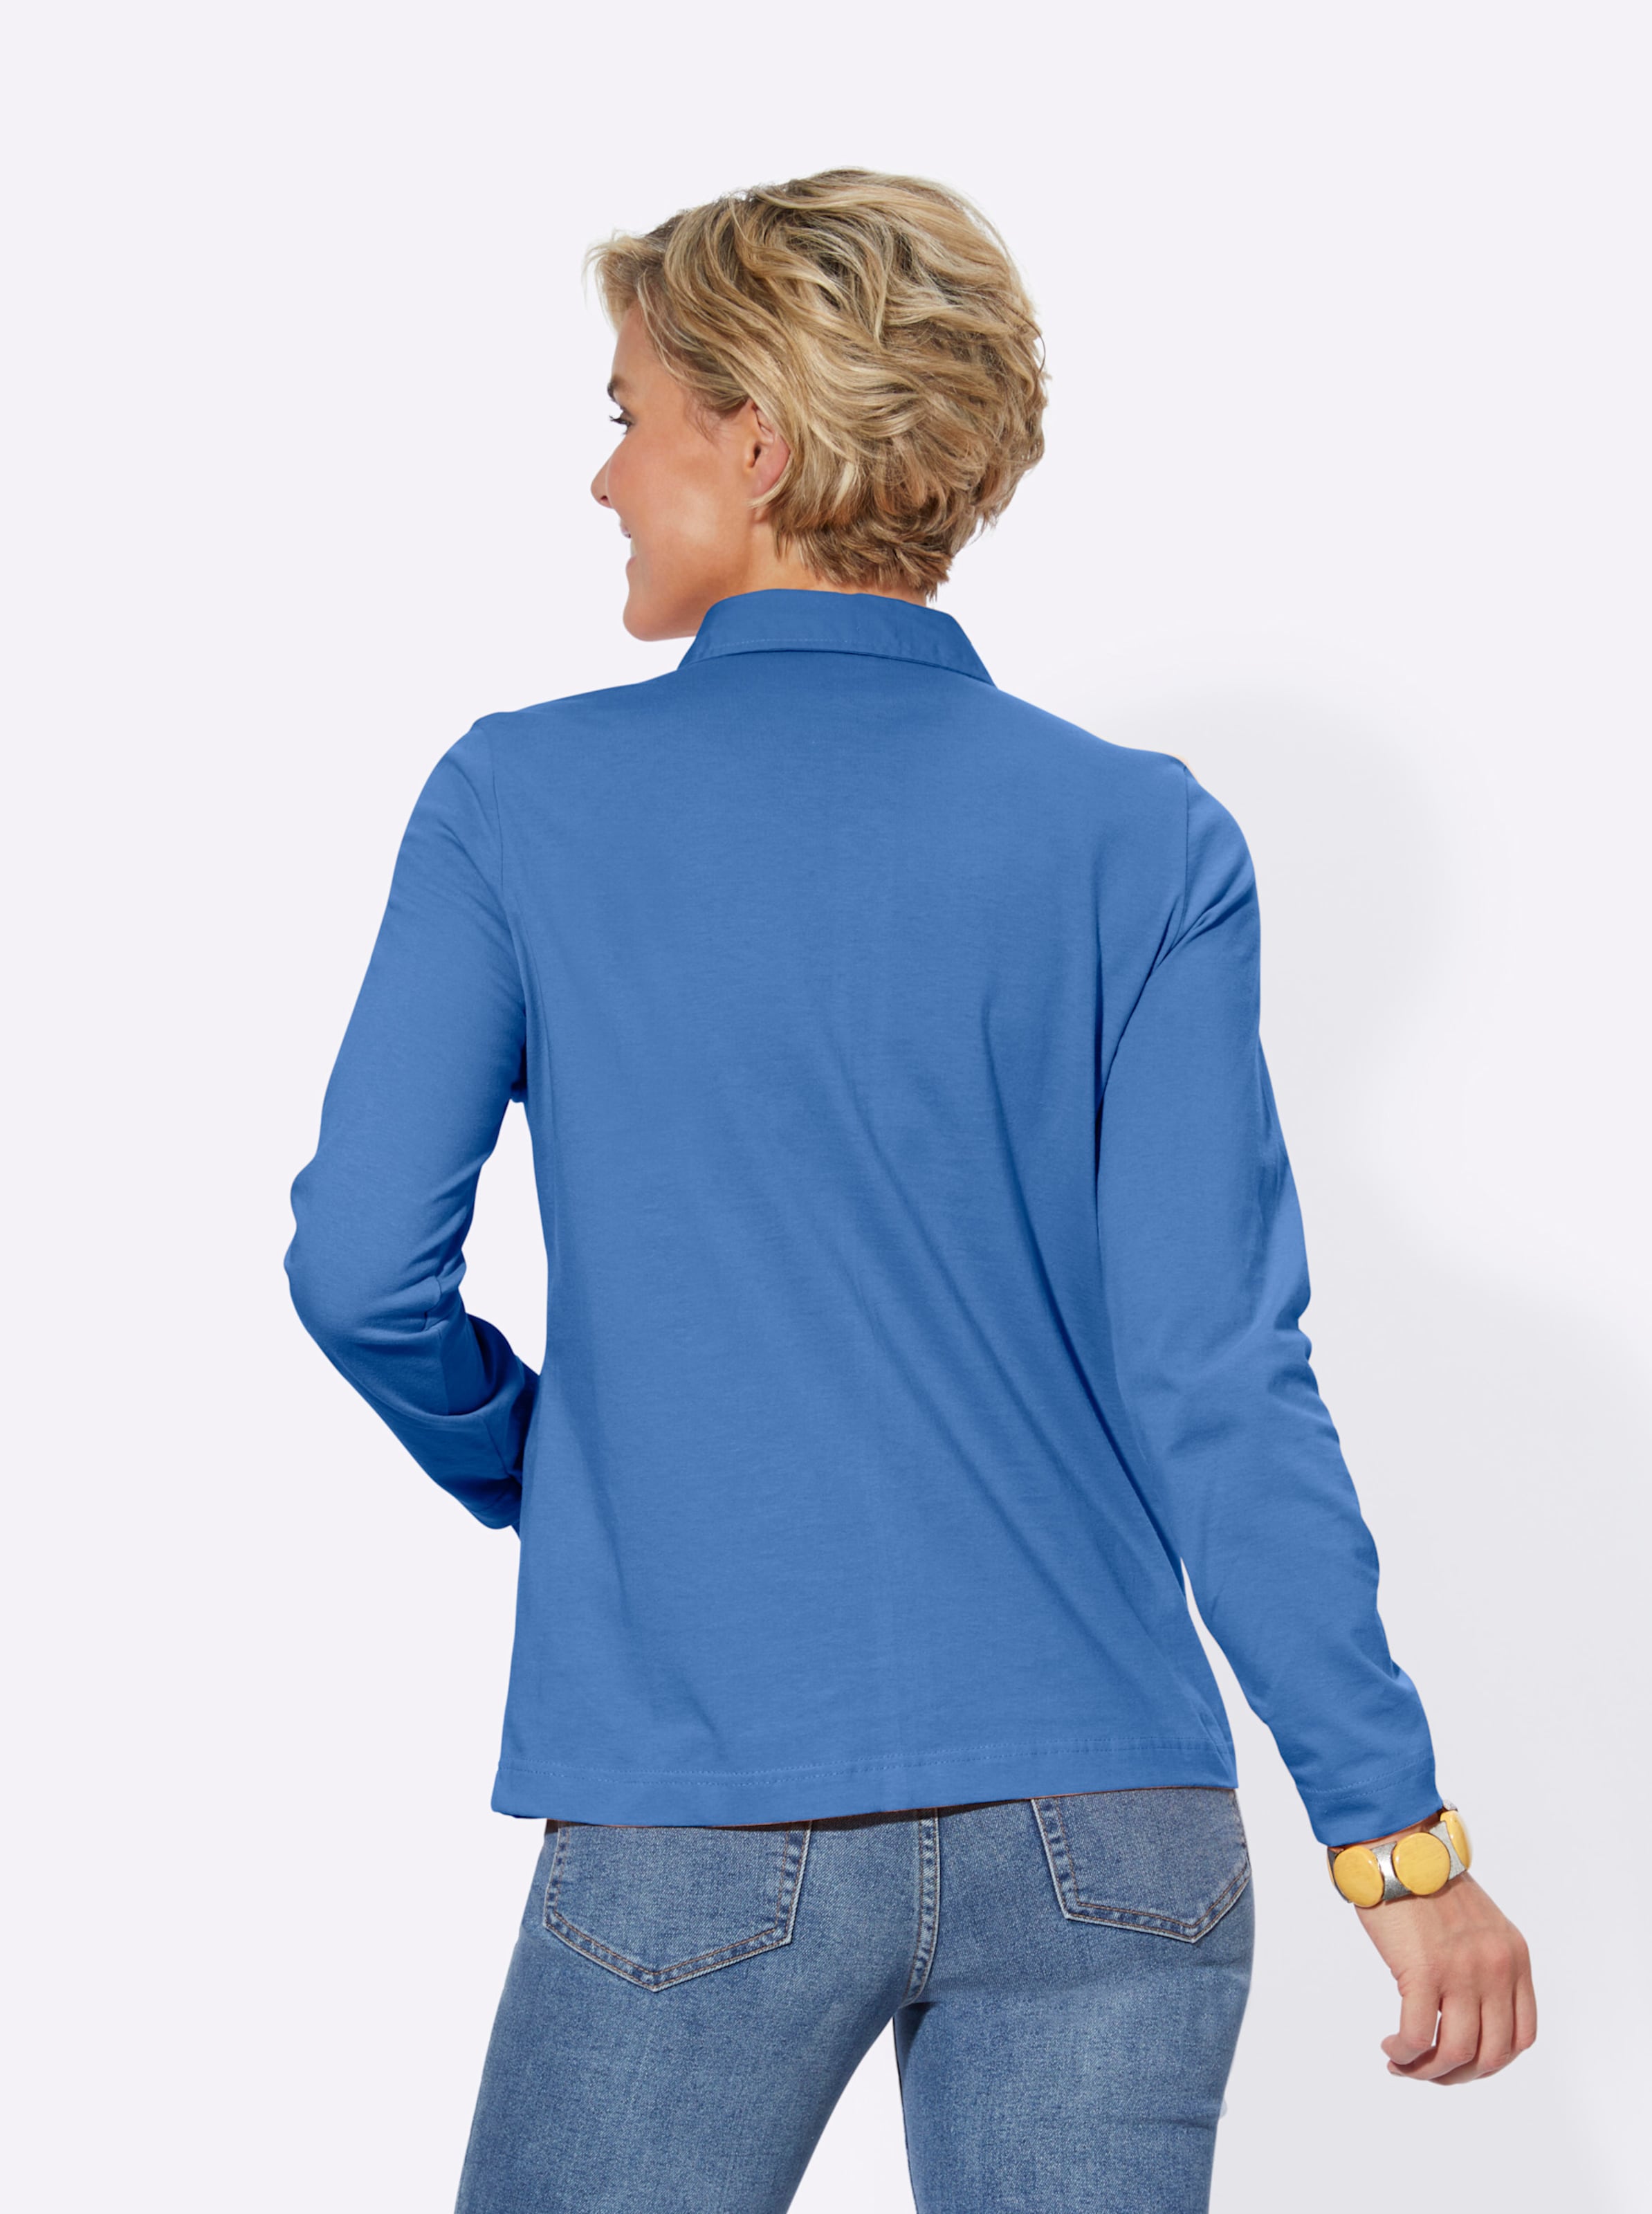 Dual/Single günstig Kaufen-Langarm-Poloshirt in blau von heine. Langarm-Poloshirt in blau von heine <![CDATA[Poloshirt in Single-Jersey-Qualität. Mit Polokragen und Knopfleiste. Langarm.]]>. 